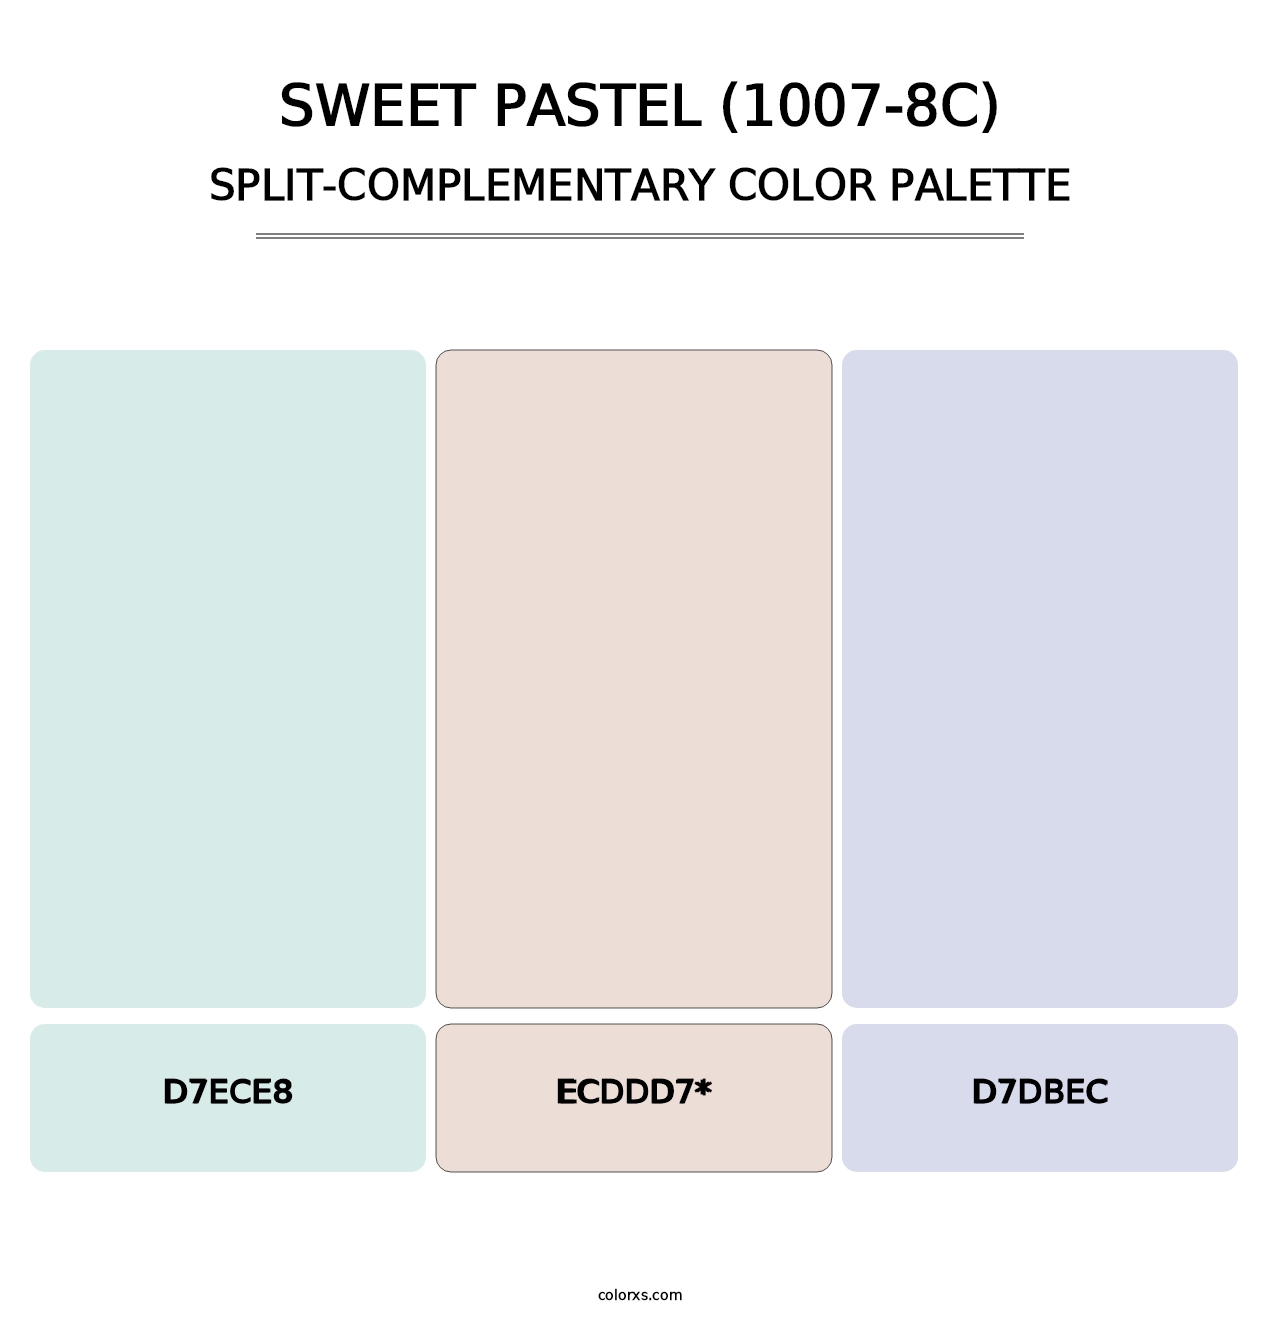 Sweet Pastel (1007-8C) - Split-Complementary Color Palette